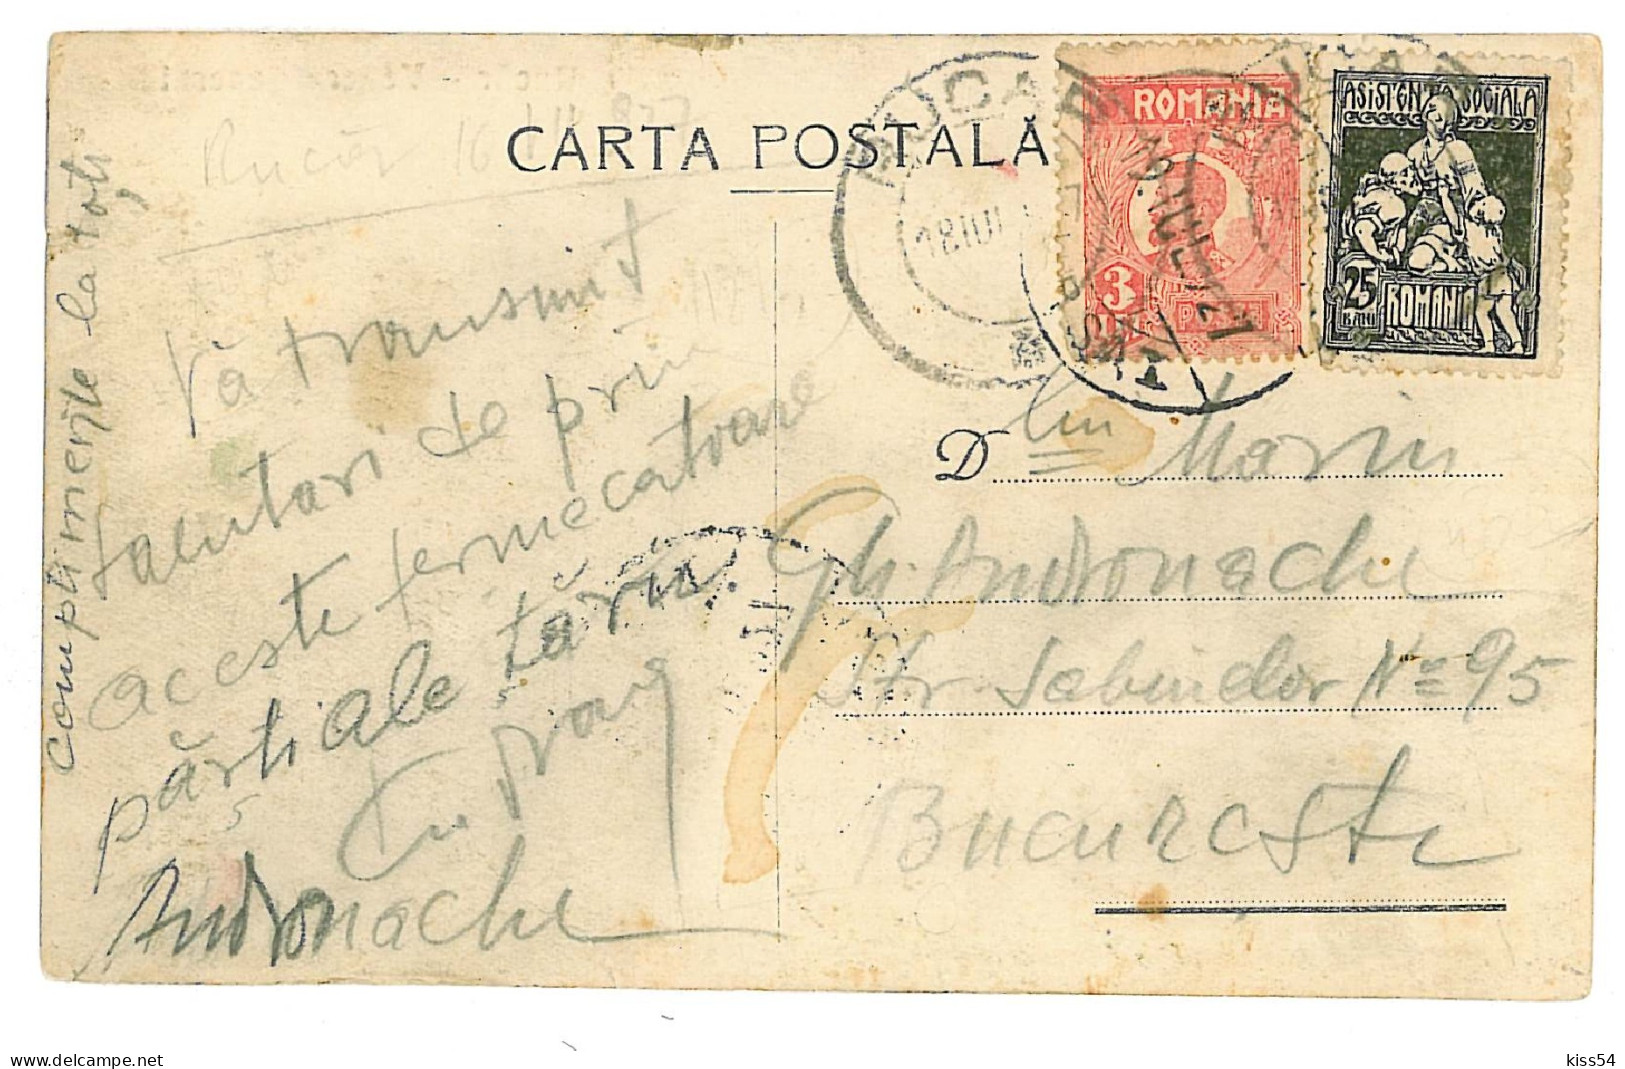 RO 33 - 1273 RUCAR, Panorama, Romania - Old Postcard - Used - 1927 - Rumänien